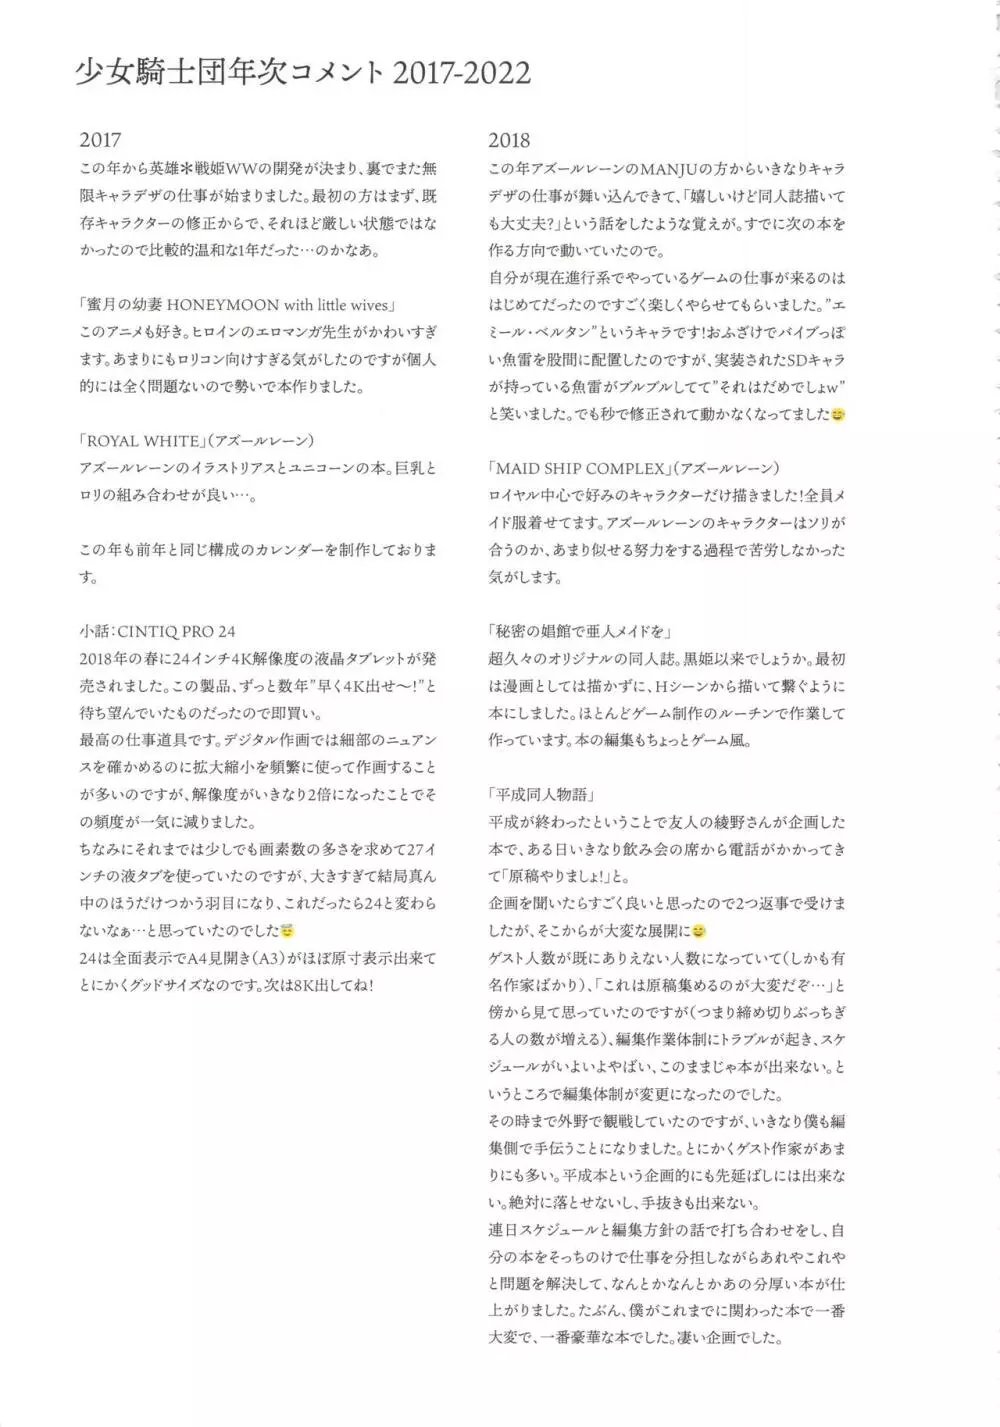 CHARACTER ILLUSTRATIONS SHOJOKISHIDAN 2008-2022 - page280